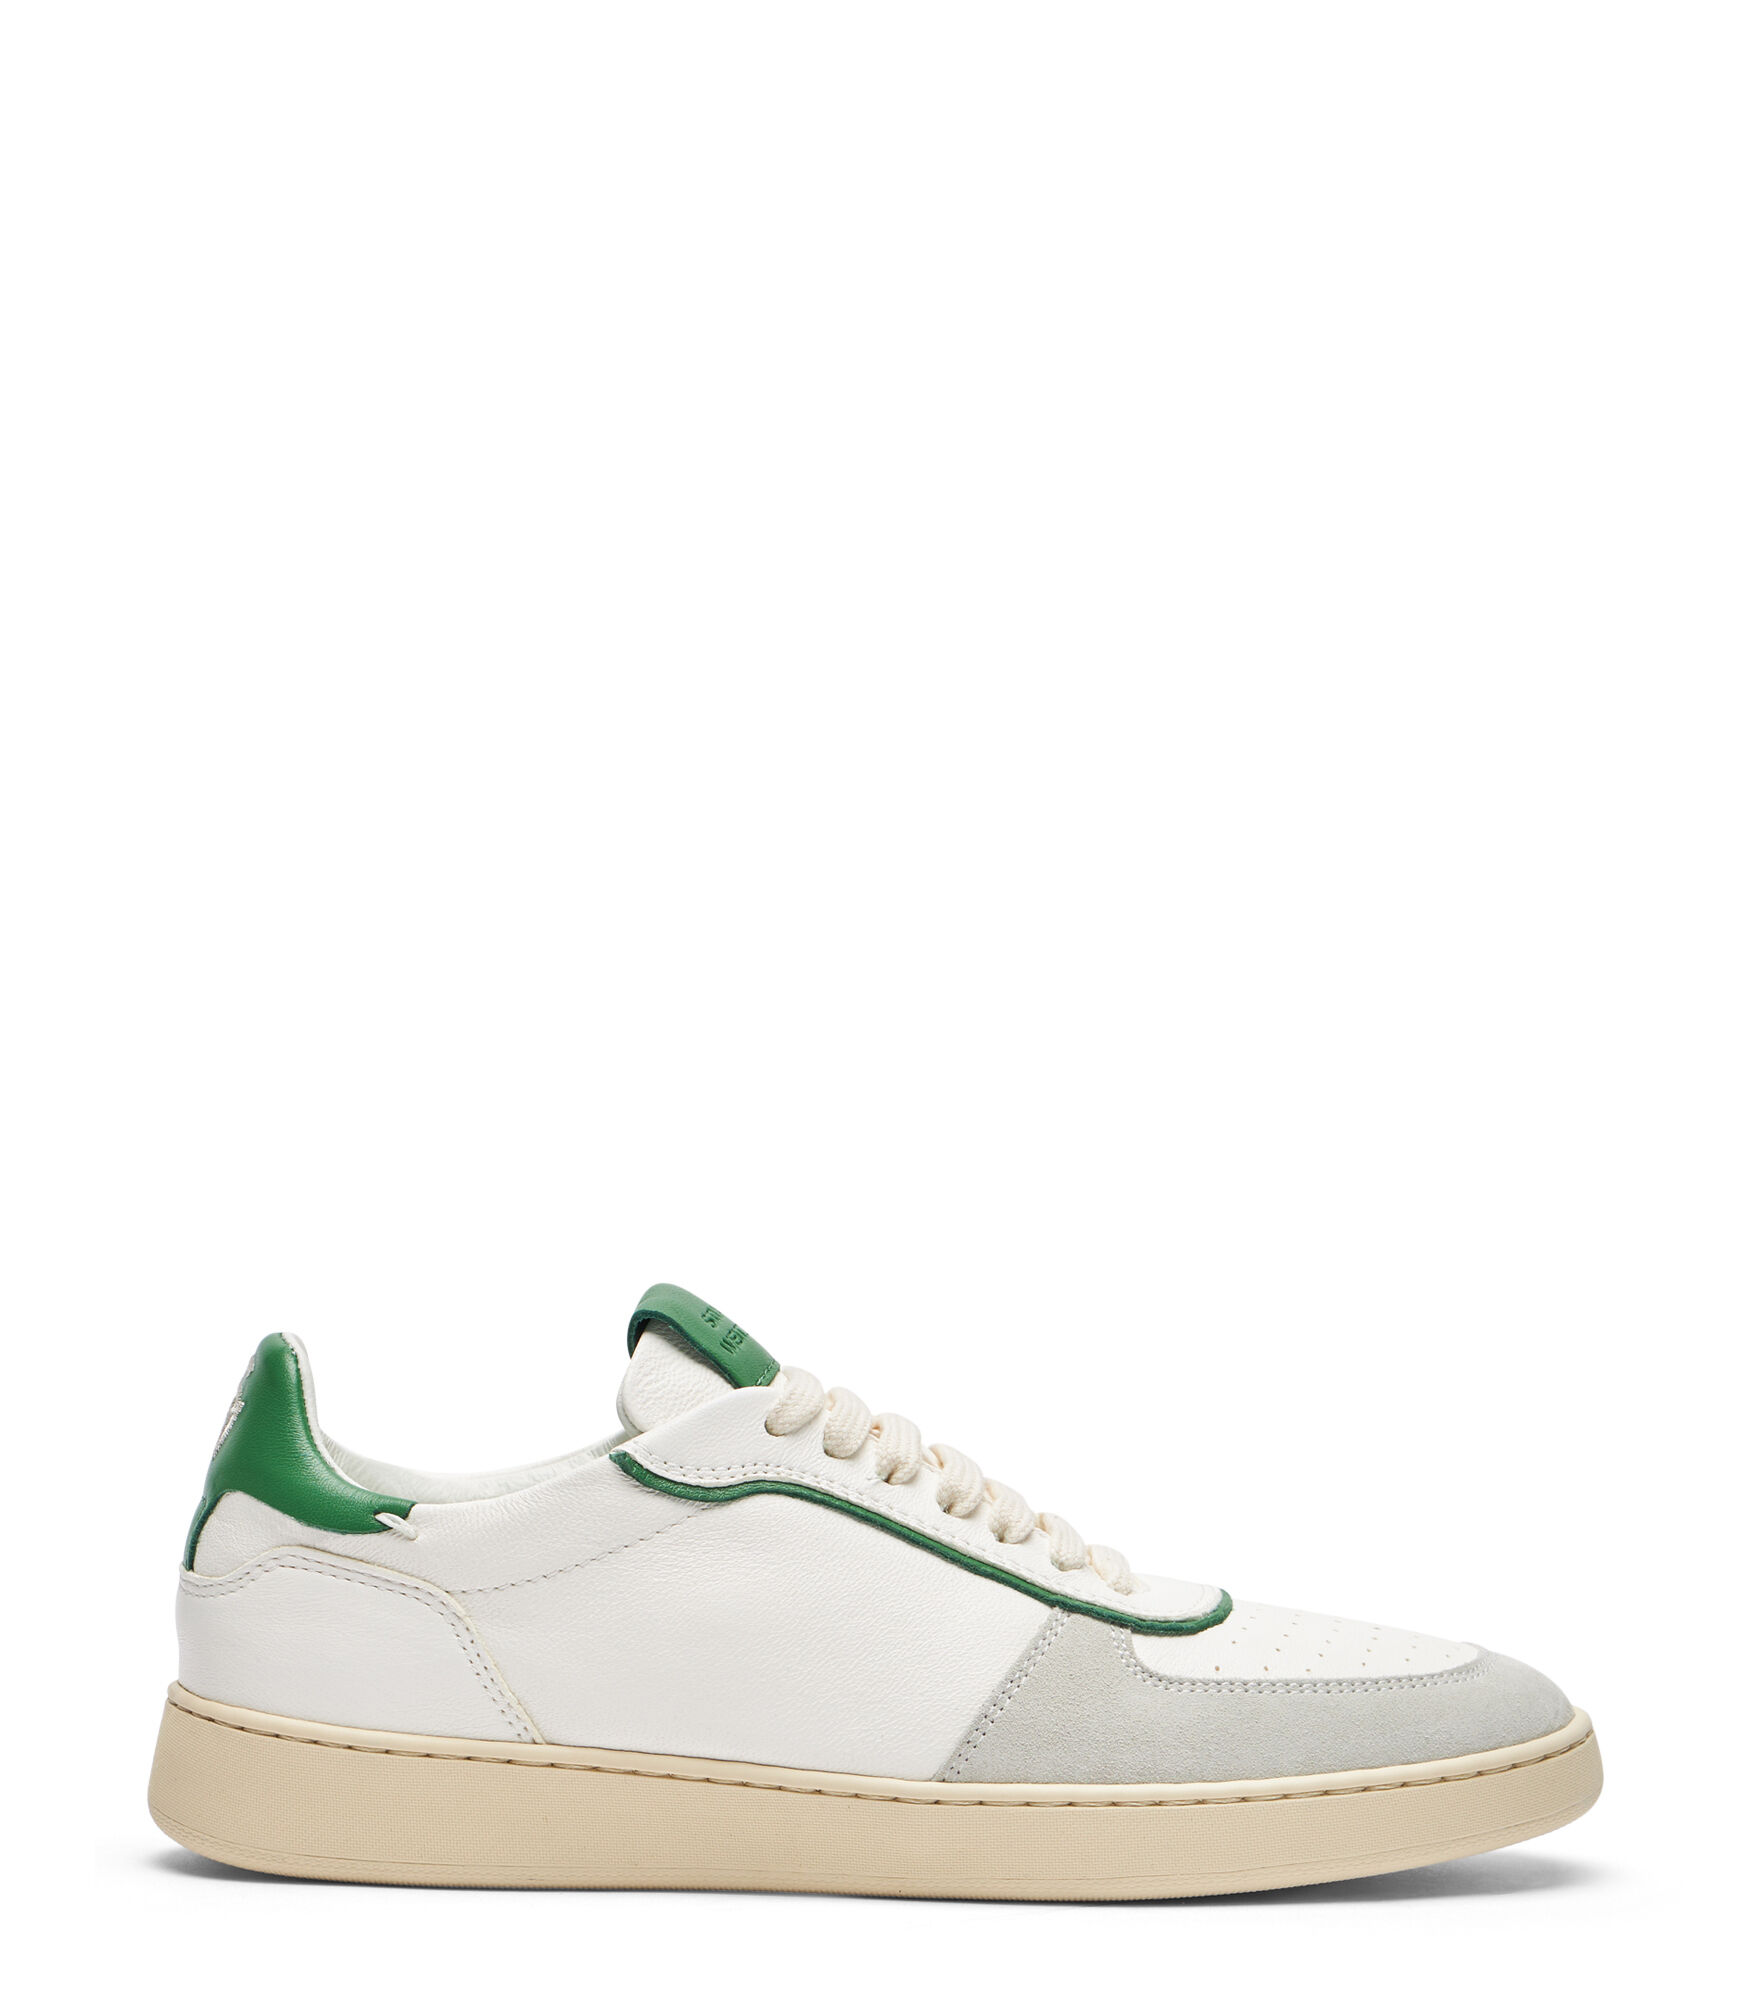 Stuart Weitzman Sw Derby - Uomo Sneakers Light Grey/white/green 35